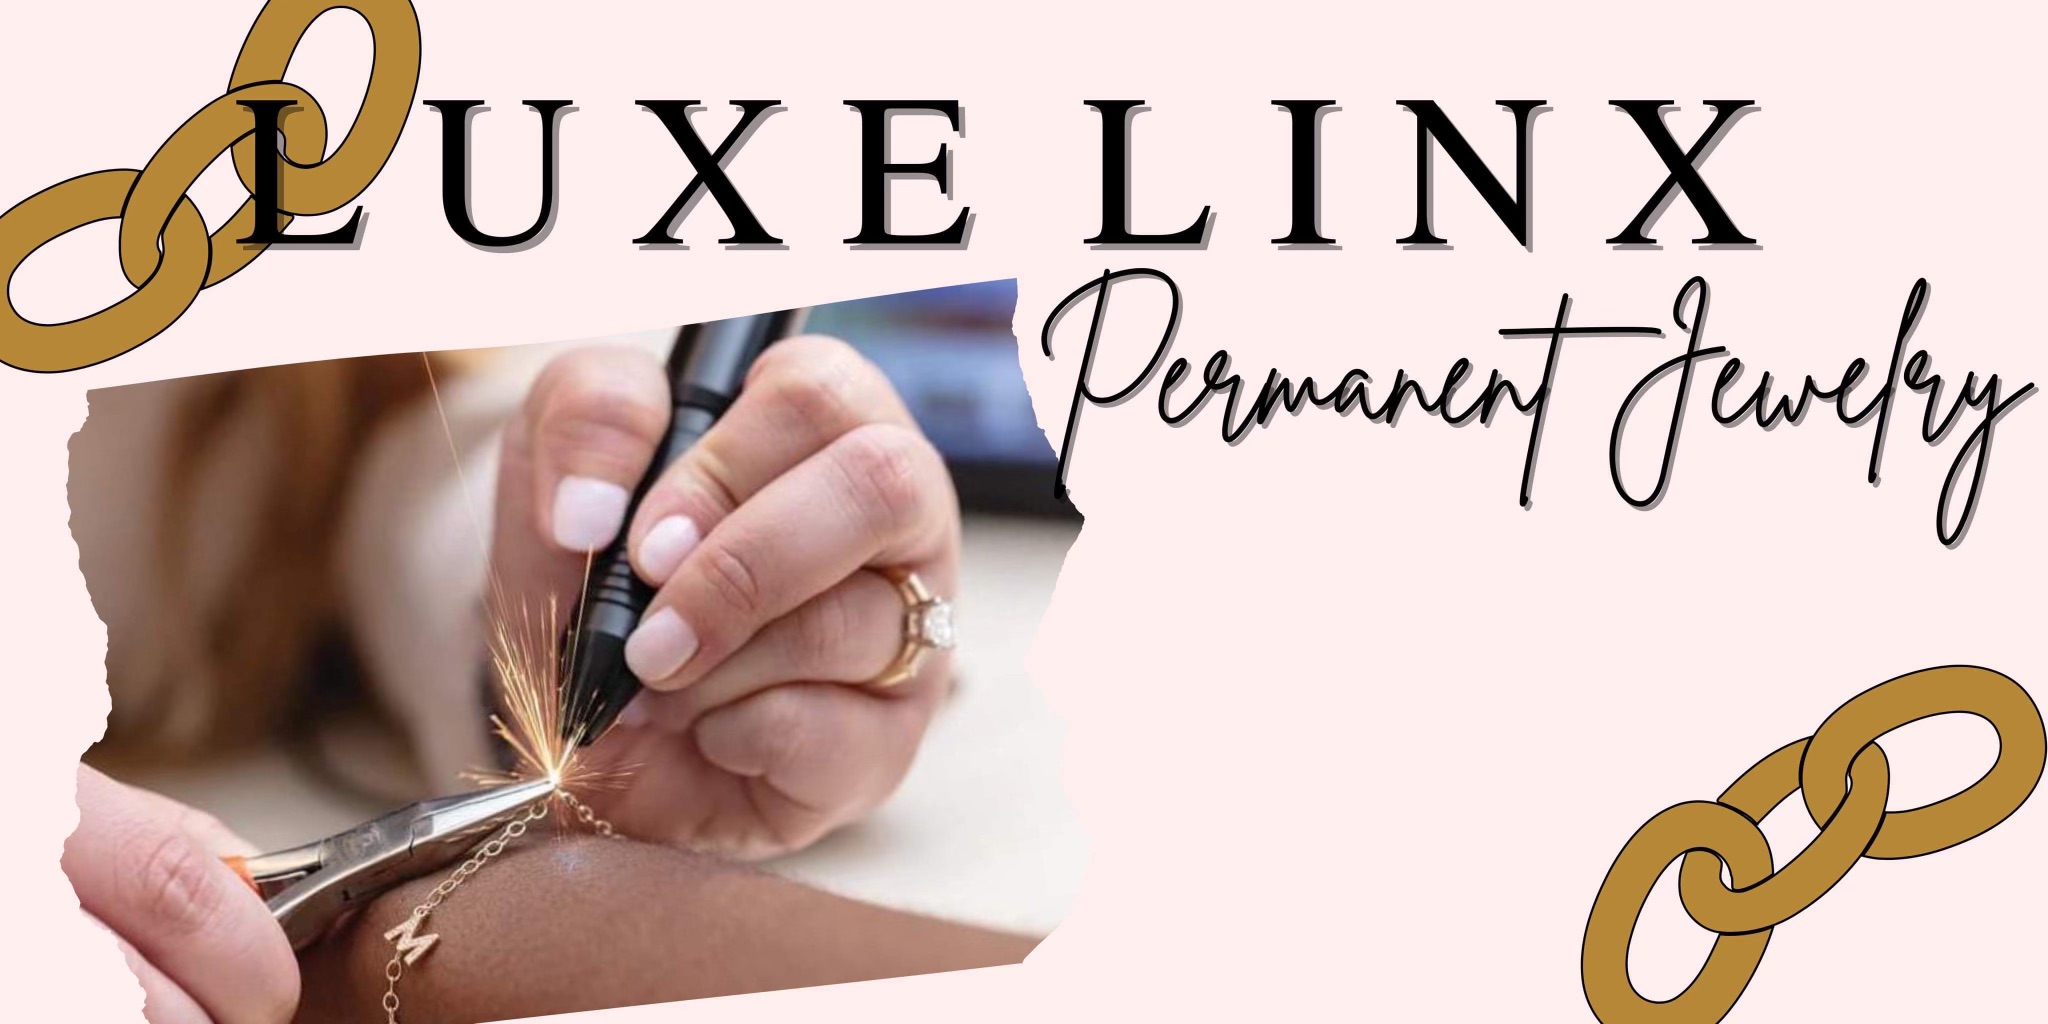 Luxe Links Permanent Jewelry